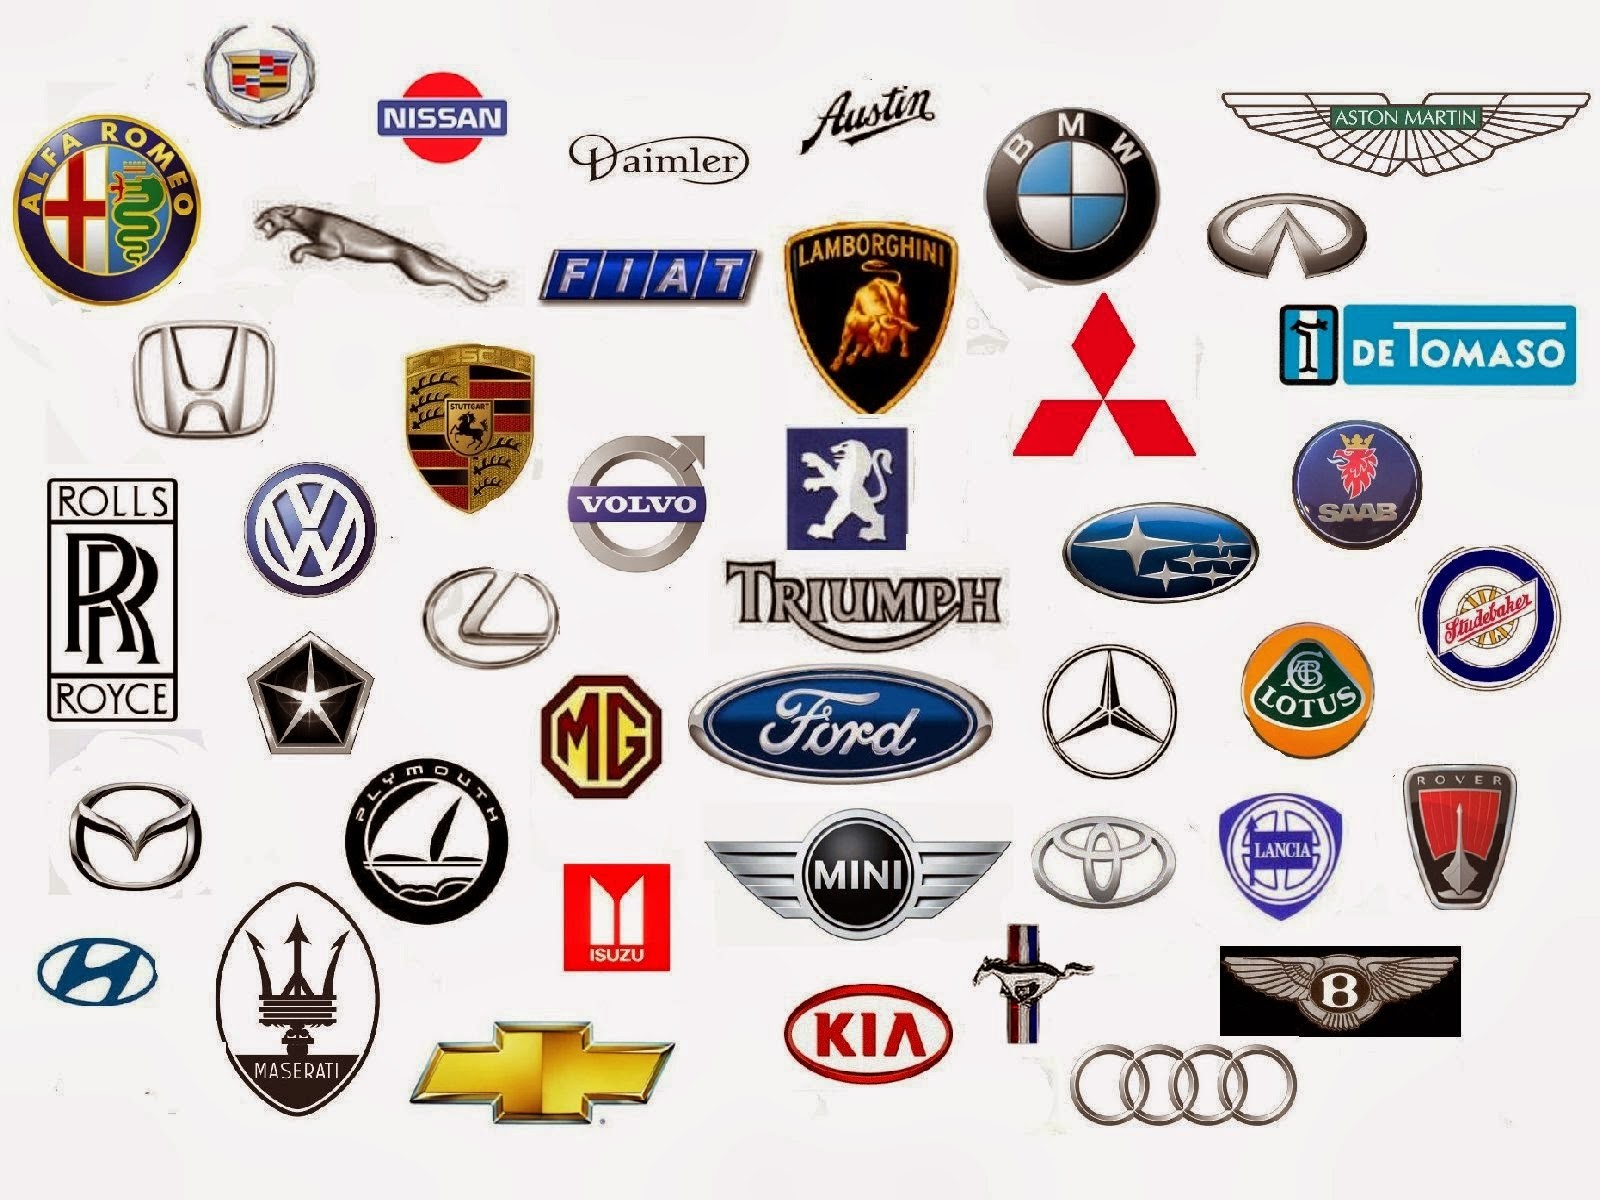 American Car Company Logos